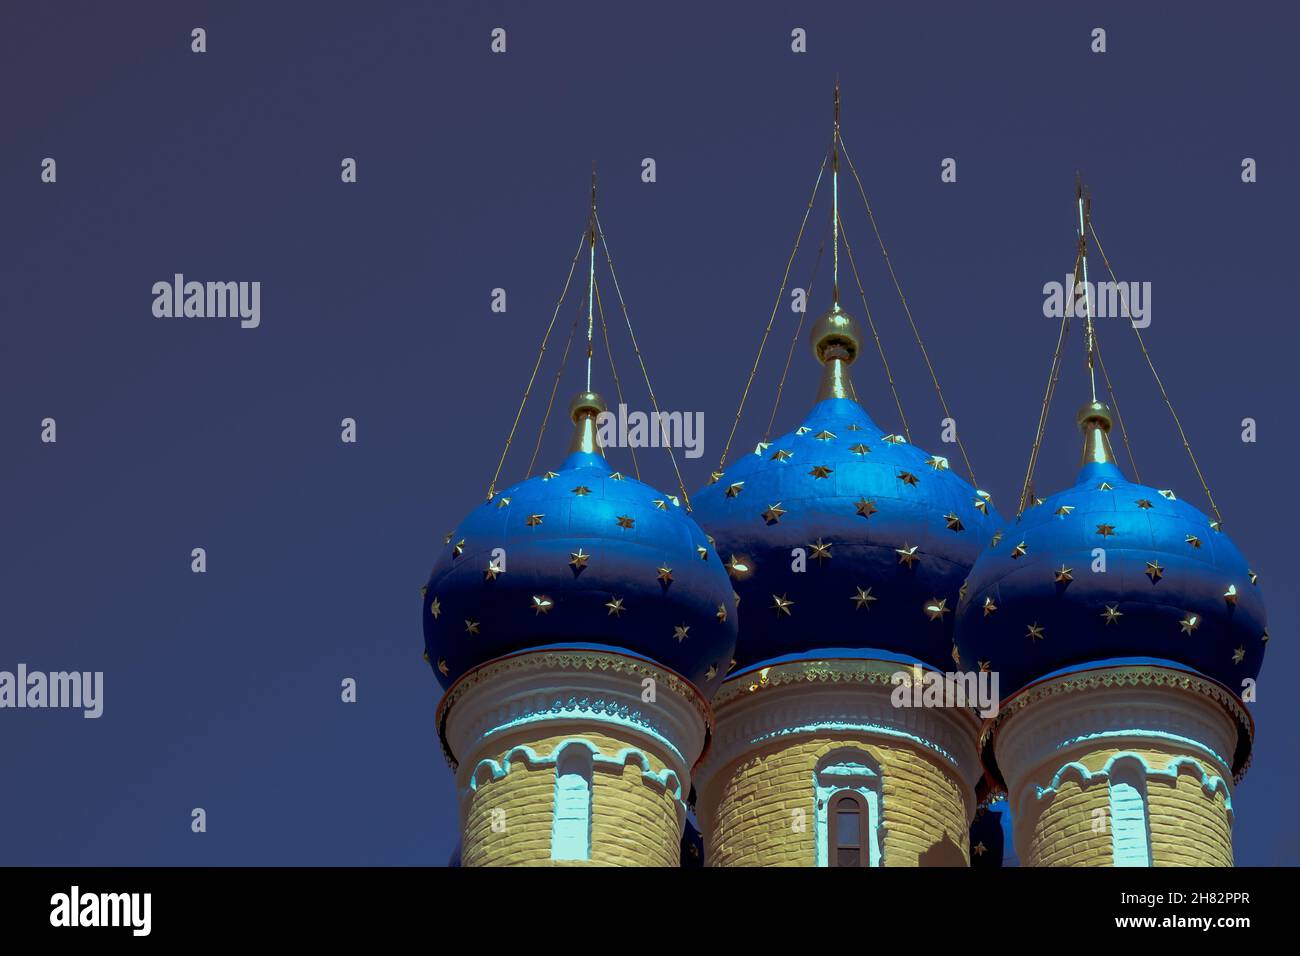 Chiesa in Russia e cielo blu. Foto di alta qualità Foto Stock